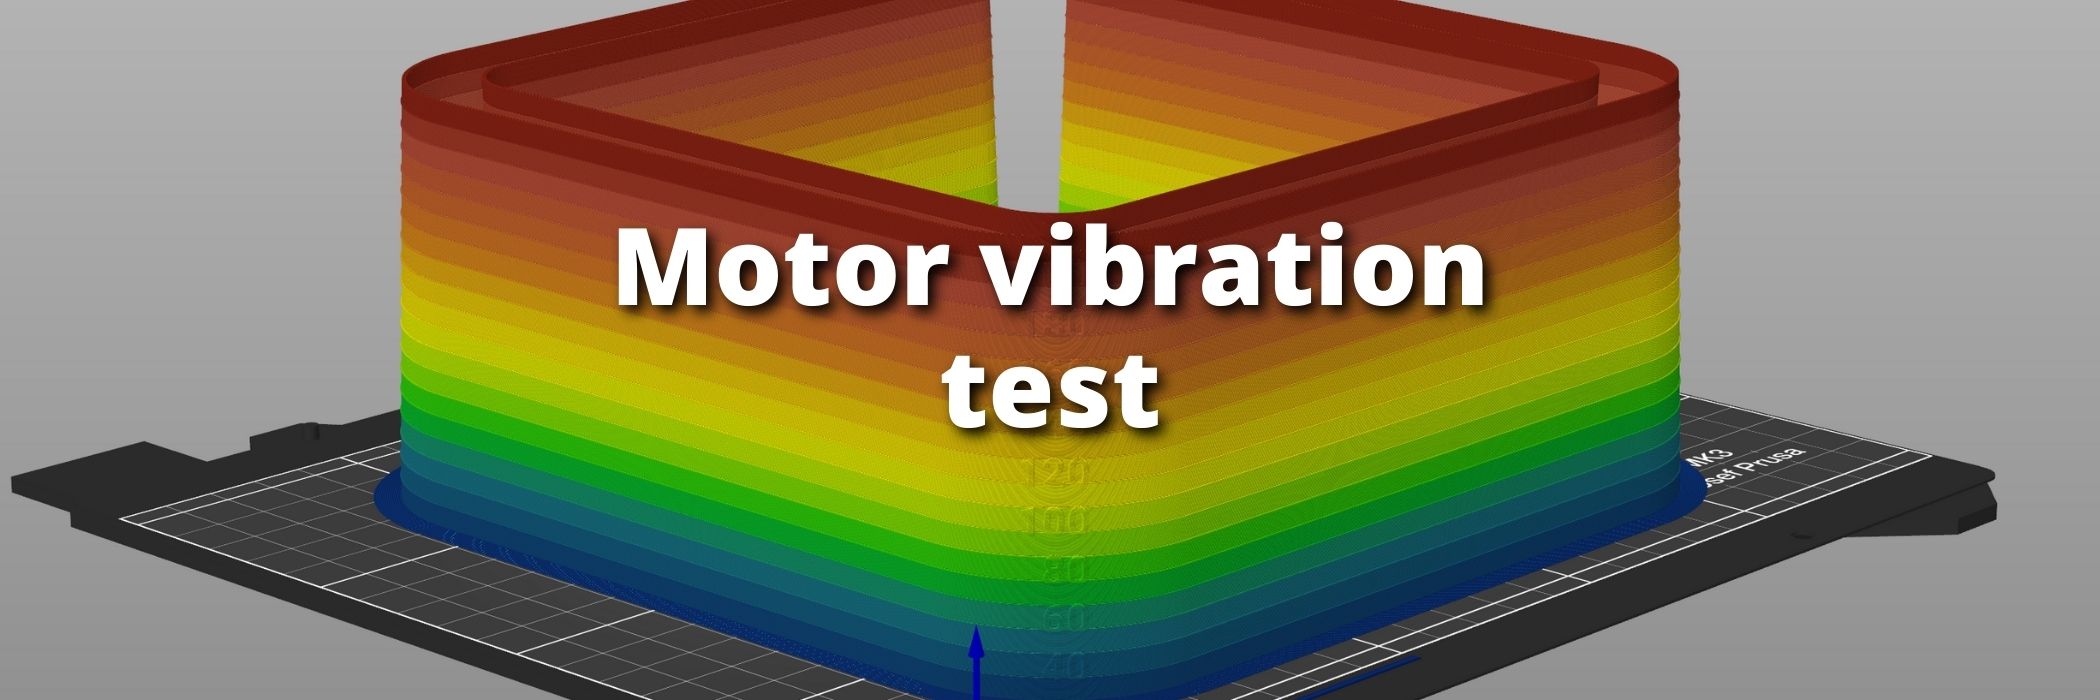 Motor vibration test